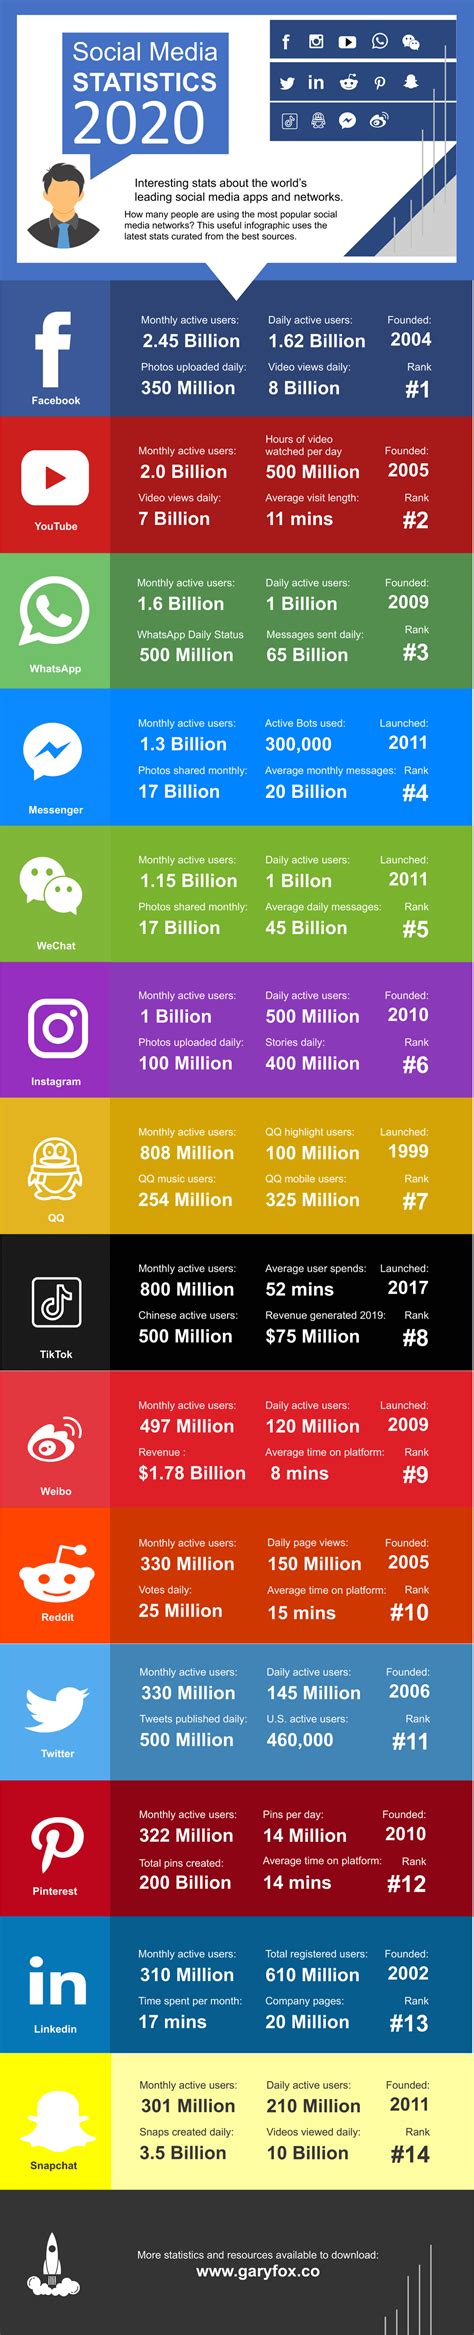 Social Media Statistics 2020 Data And Infographic Smm Socialmedia Socialmediamarketing